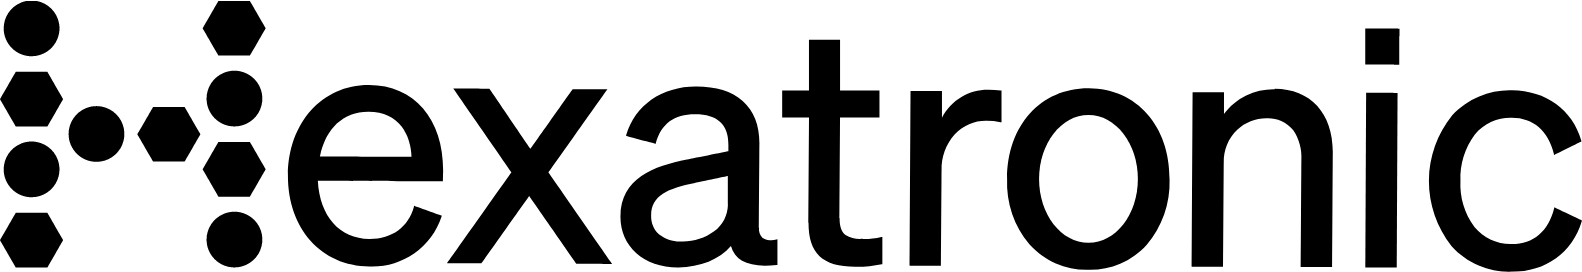 Hexatronic Group AB logo large (transparent PNG)